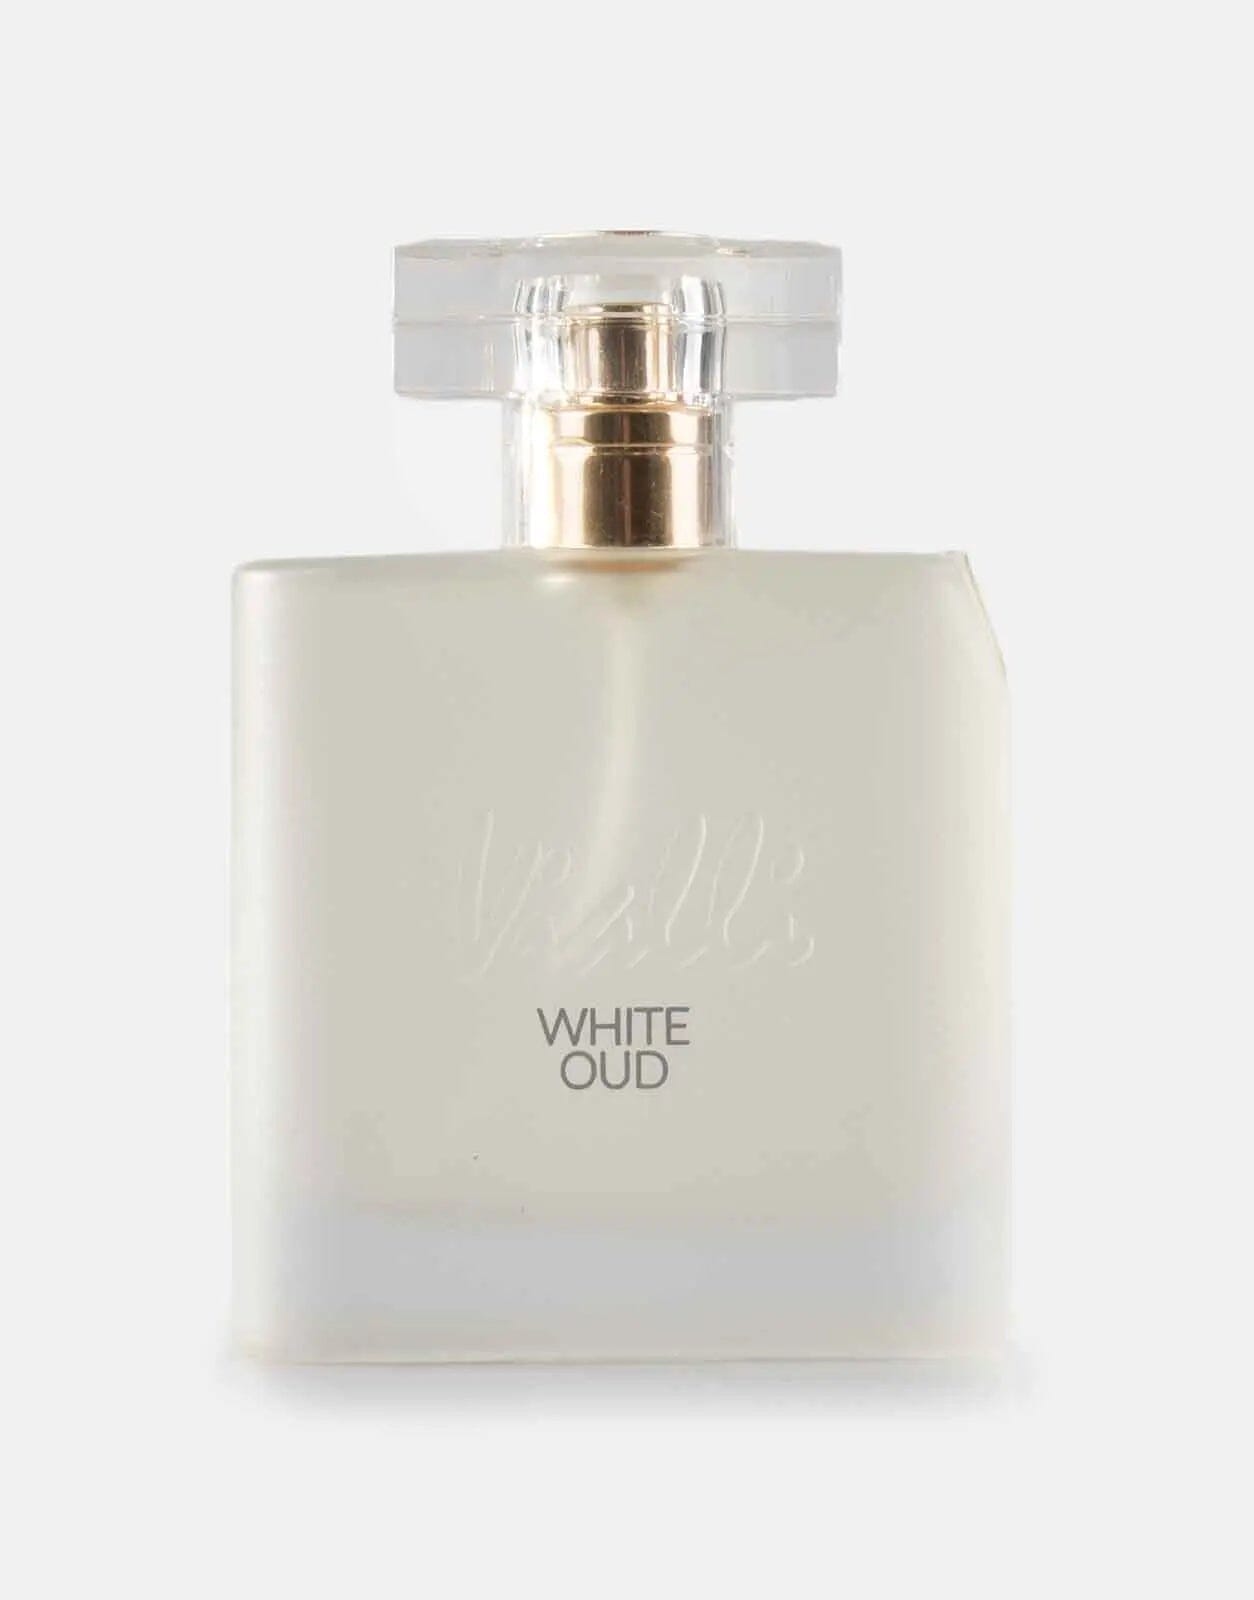 Vialli White Oud - Subwear